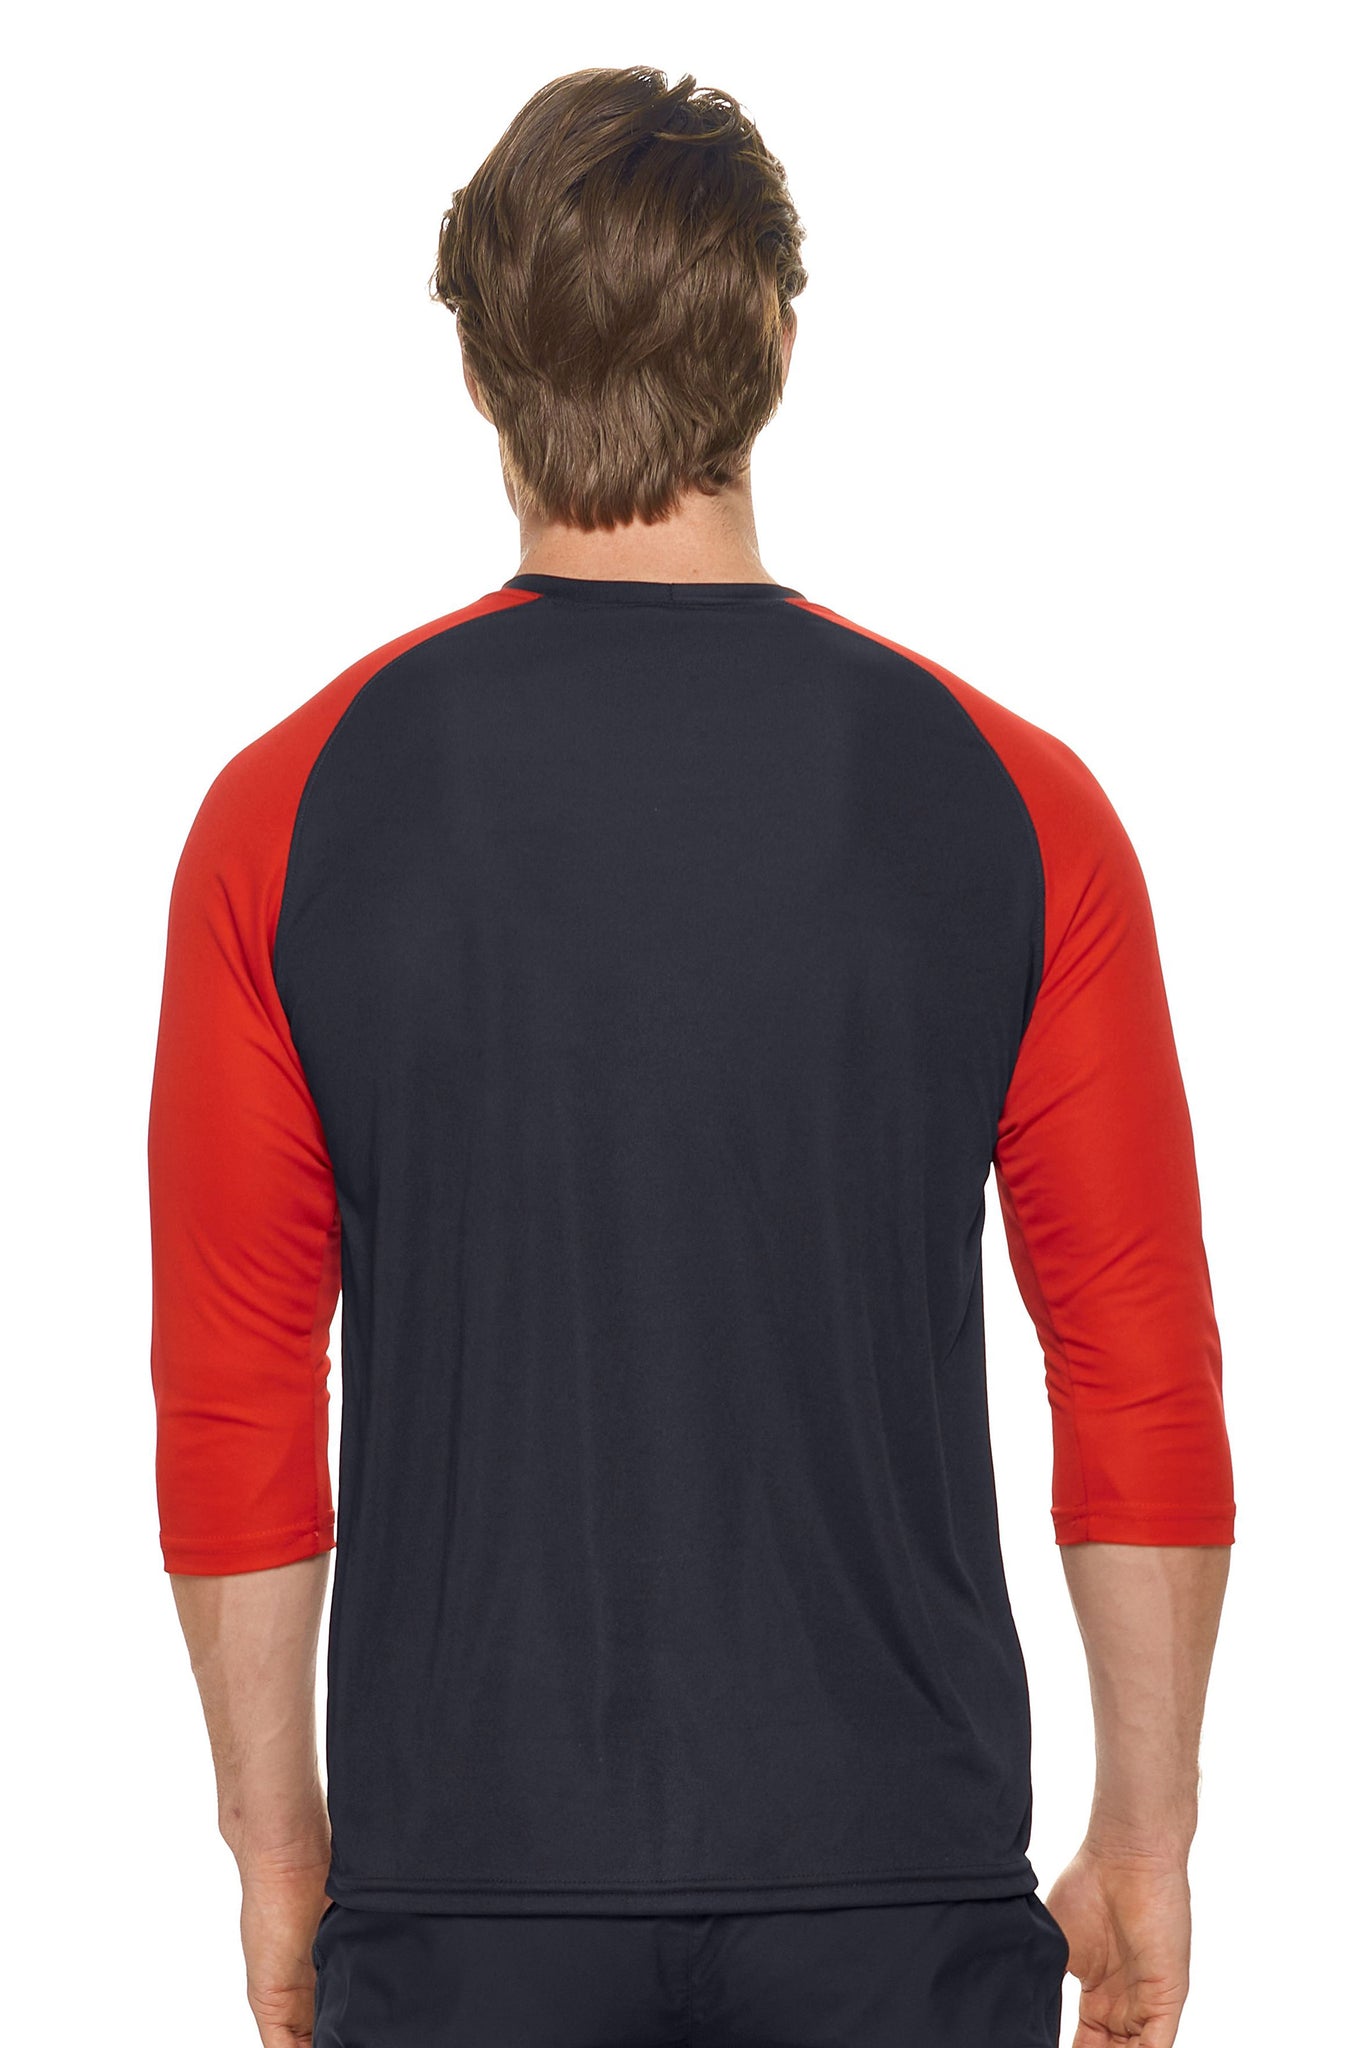 AI926🇺🇸 DriMax™ ¾ Raglan Sleeve Outfitter Crewneck - Expert Brand #BLACK RED